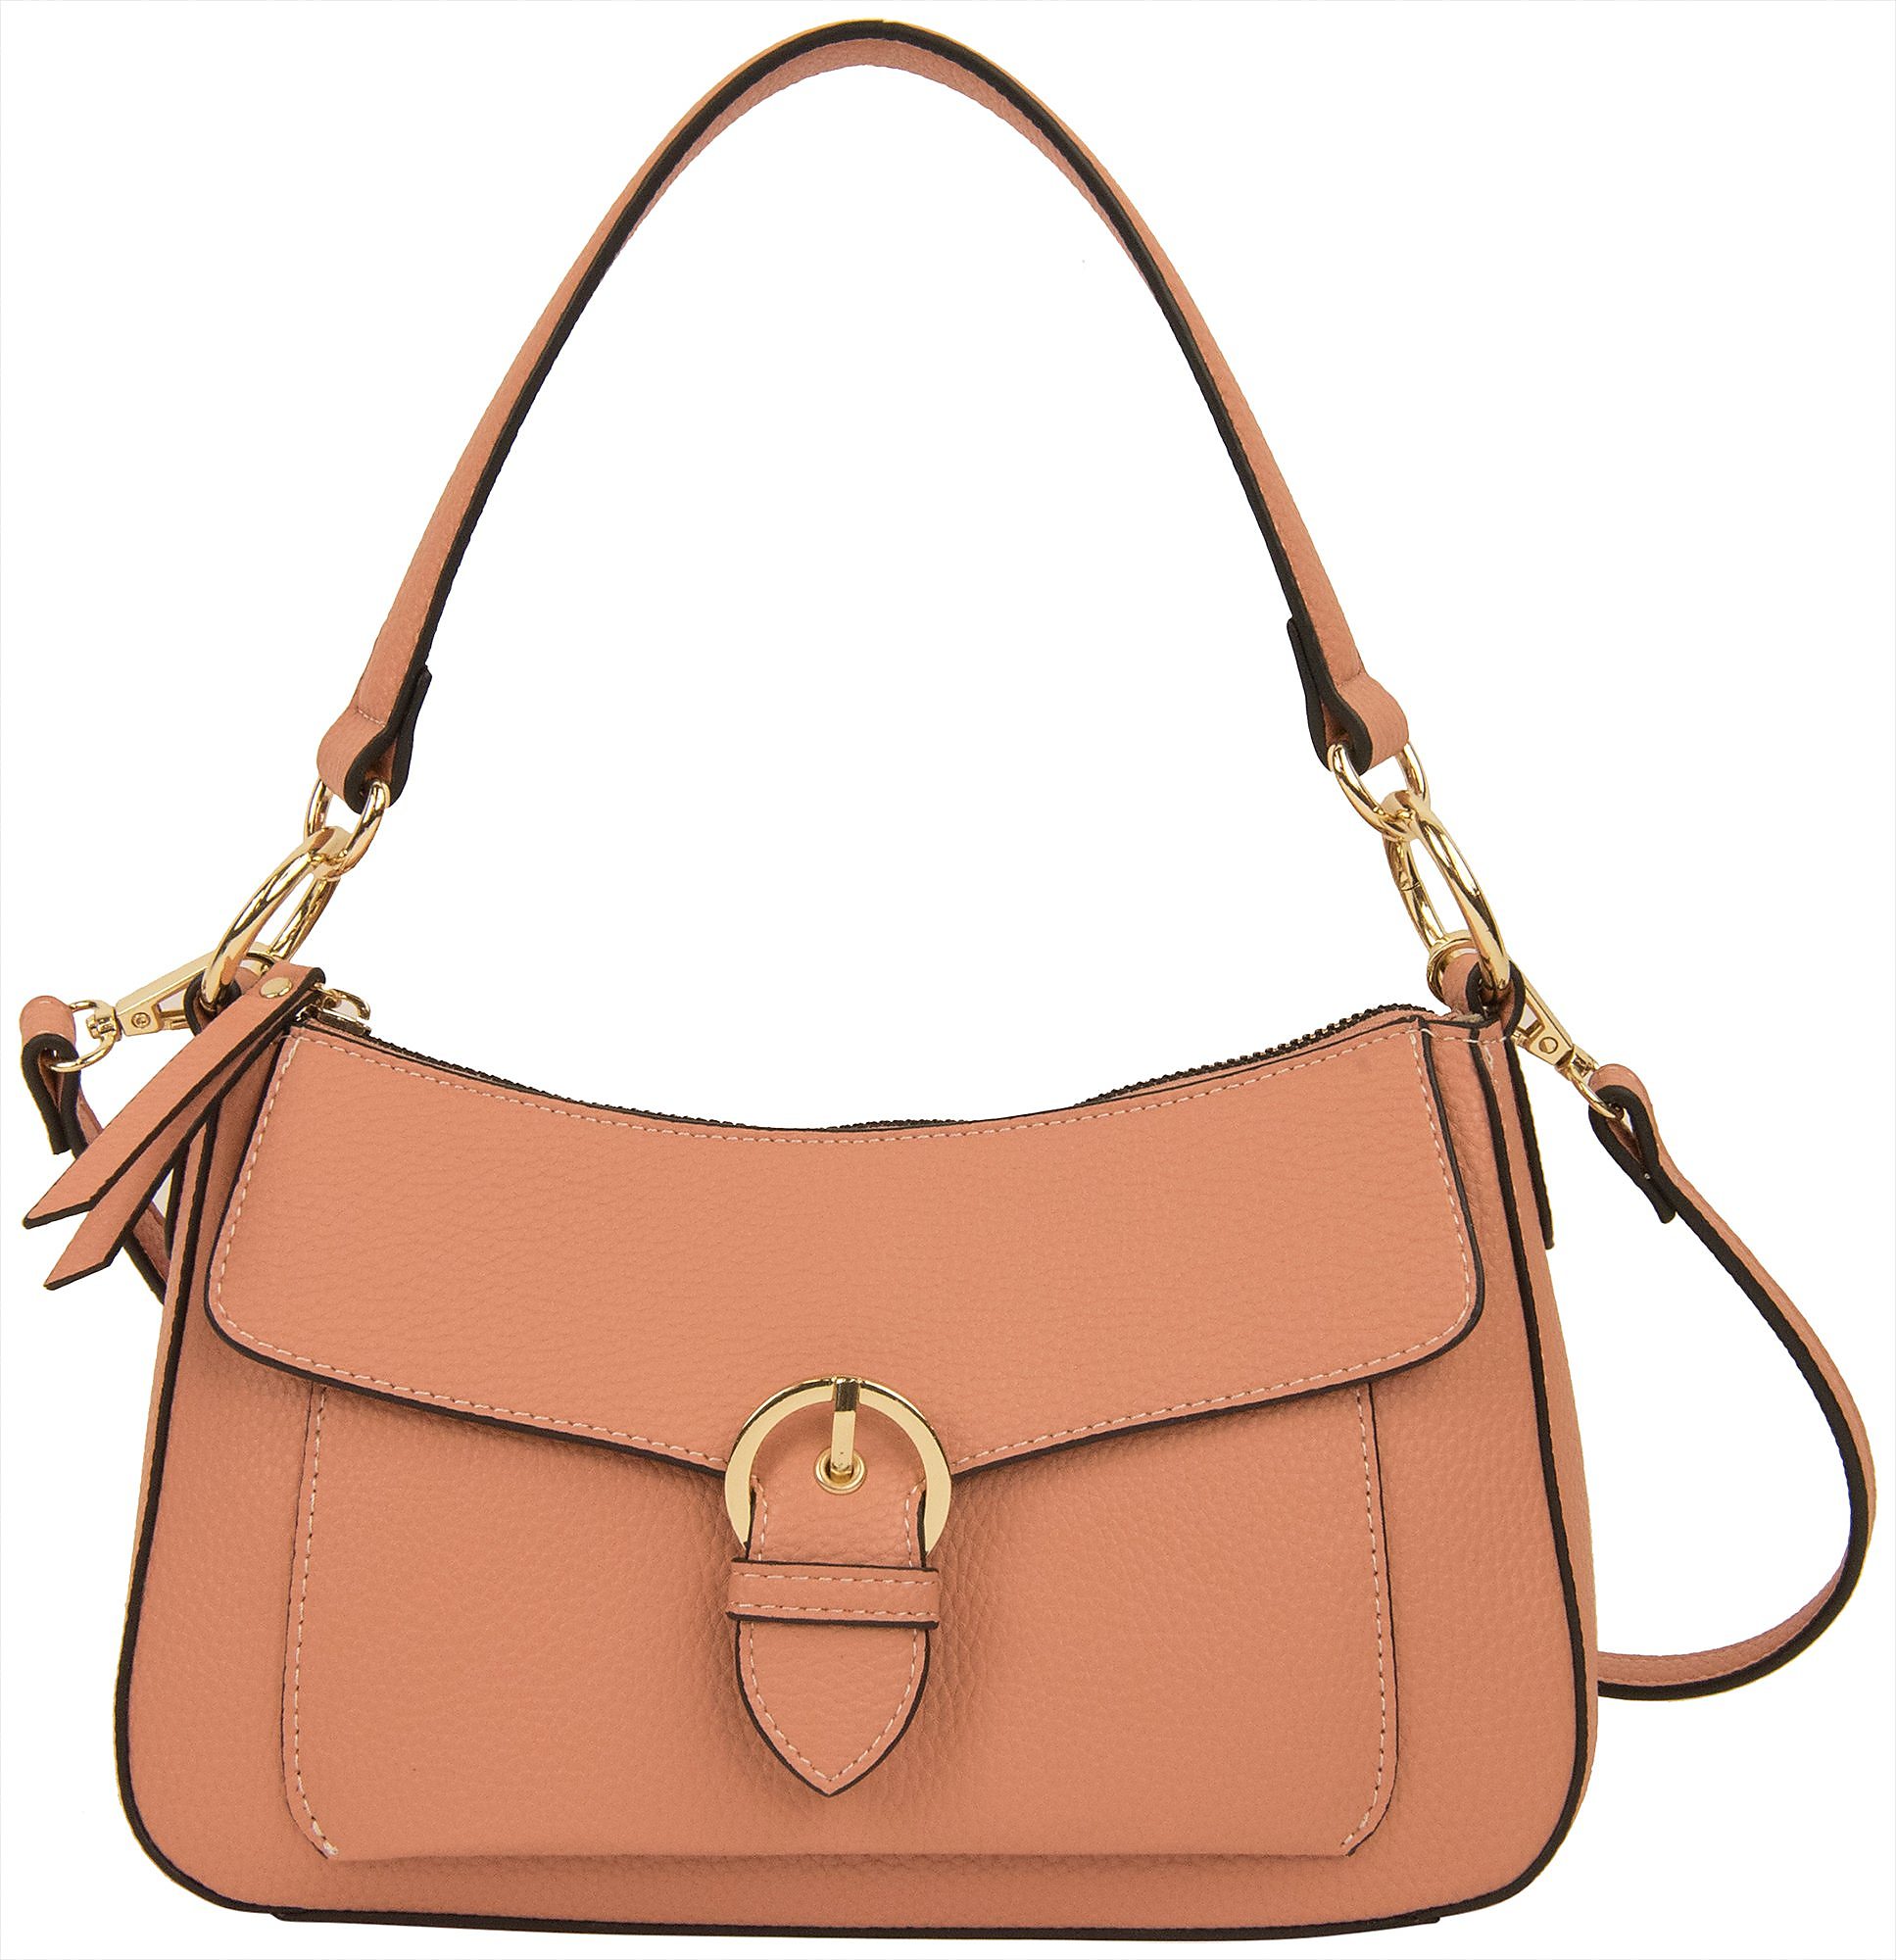 Nanette Lepore Aviana Solid Handbag One Size Melon orange | eBay